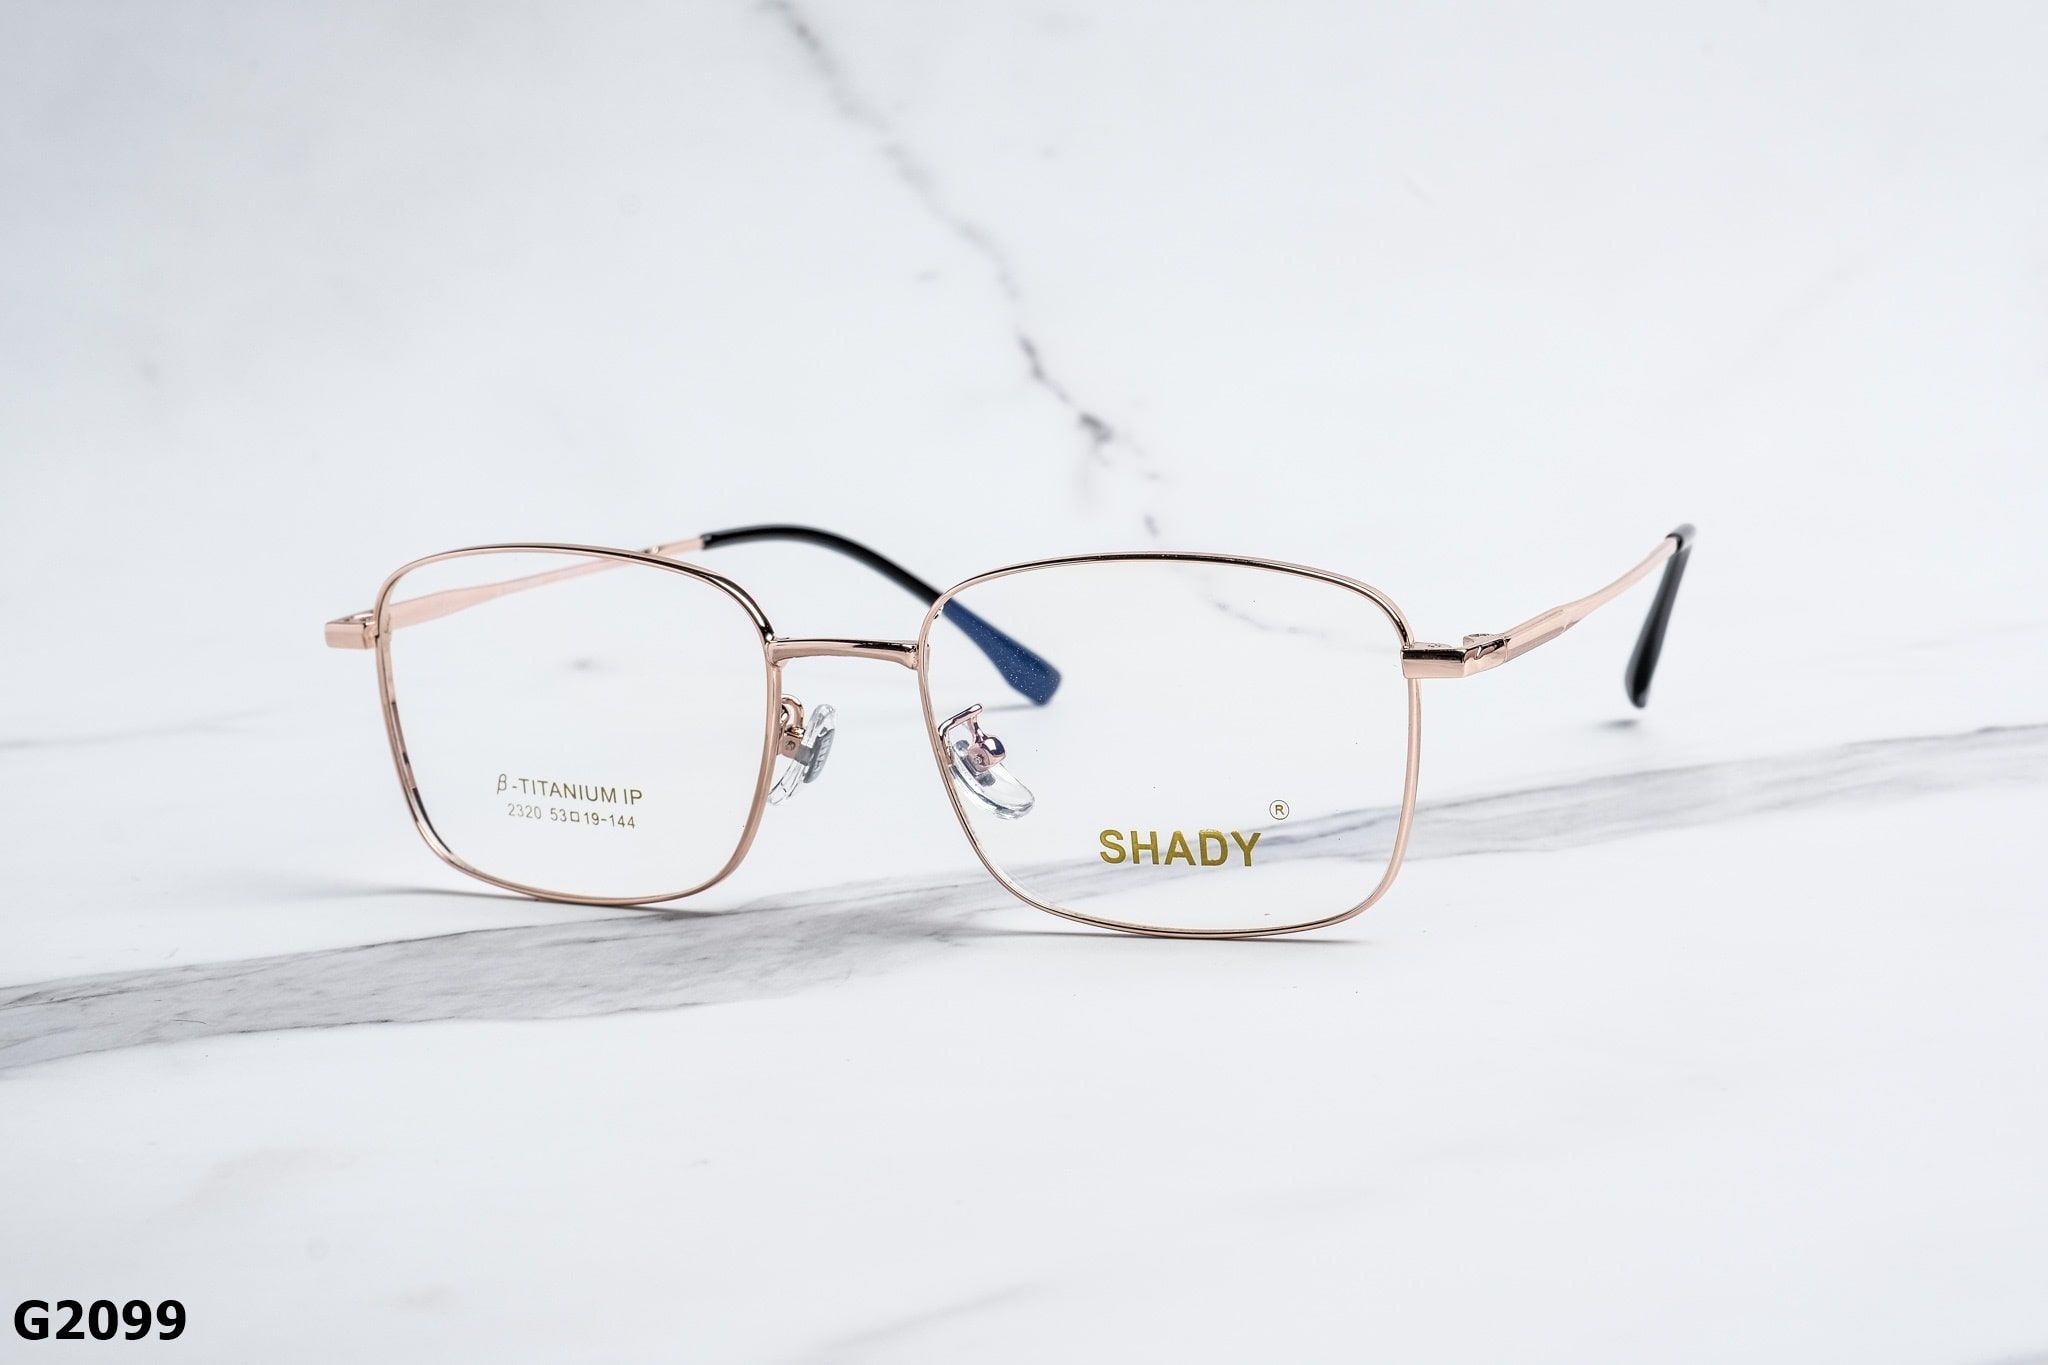  SHADY Eyewear - Glasses - G2099 